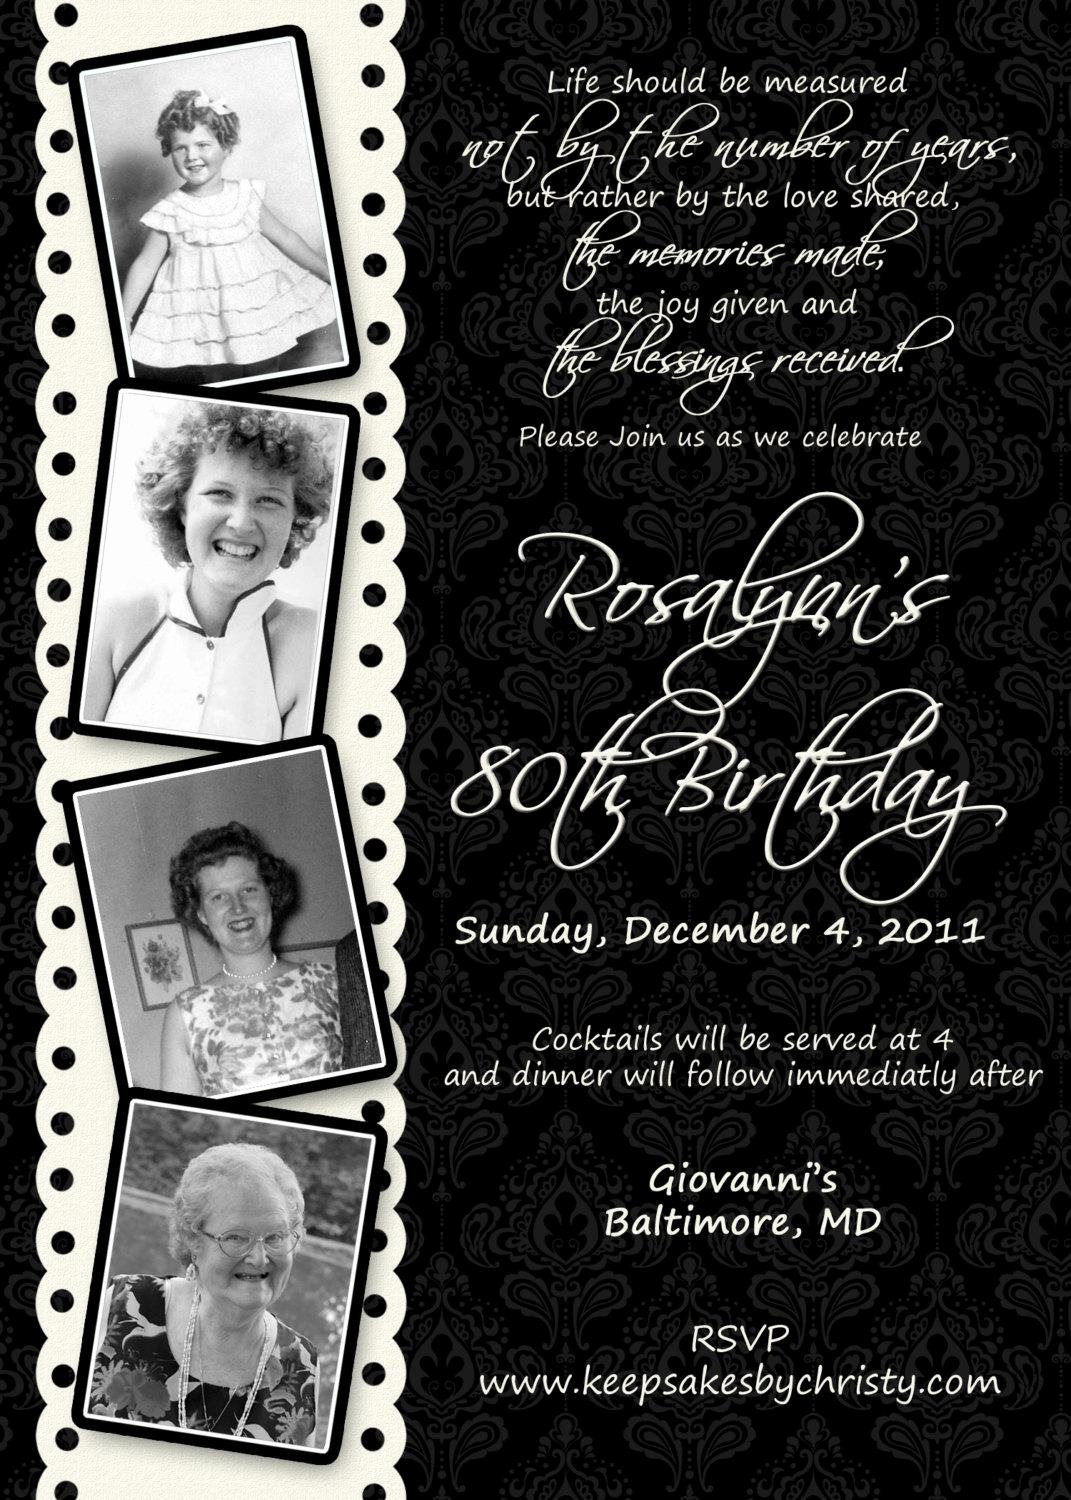 80th Birthday Party Invitations Elegant 15 Sample 80th Birthday Invitations Templates Ideas